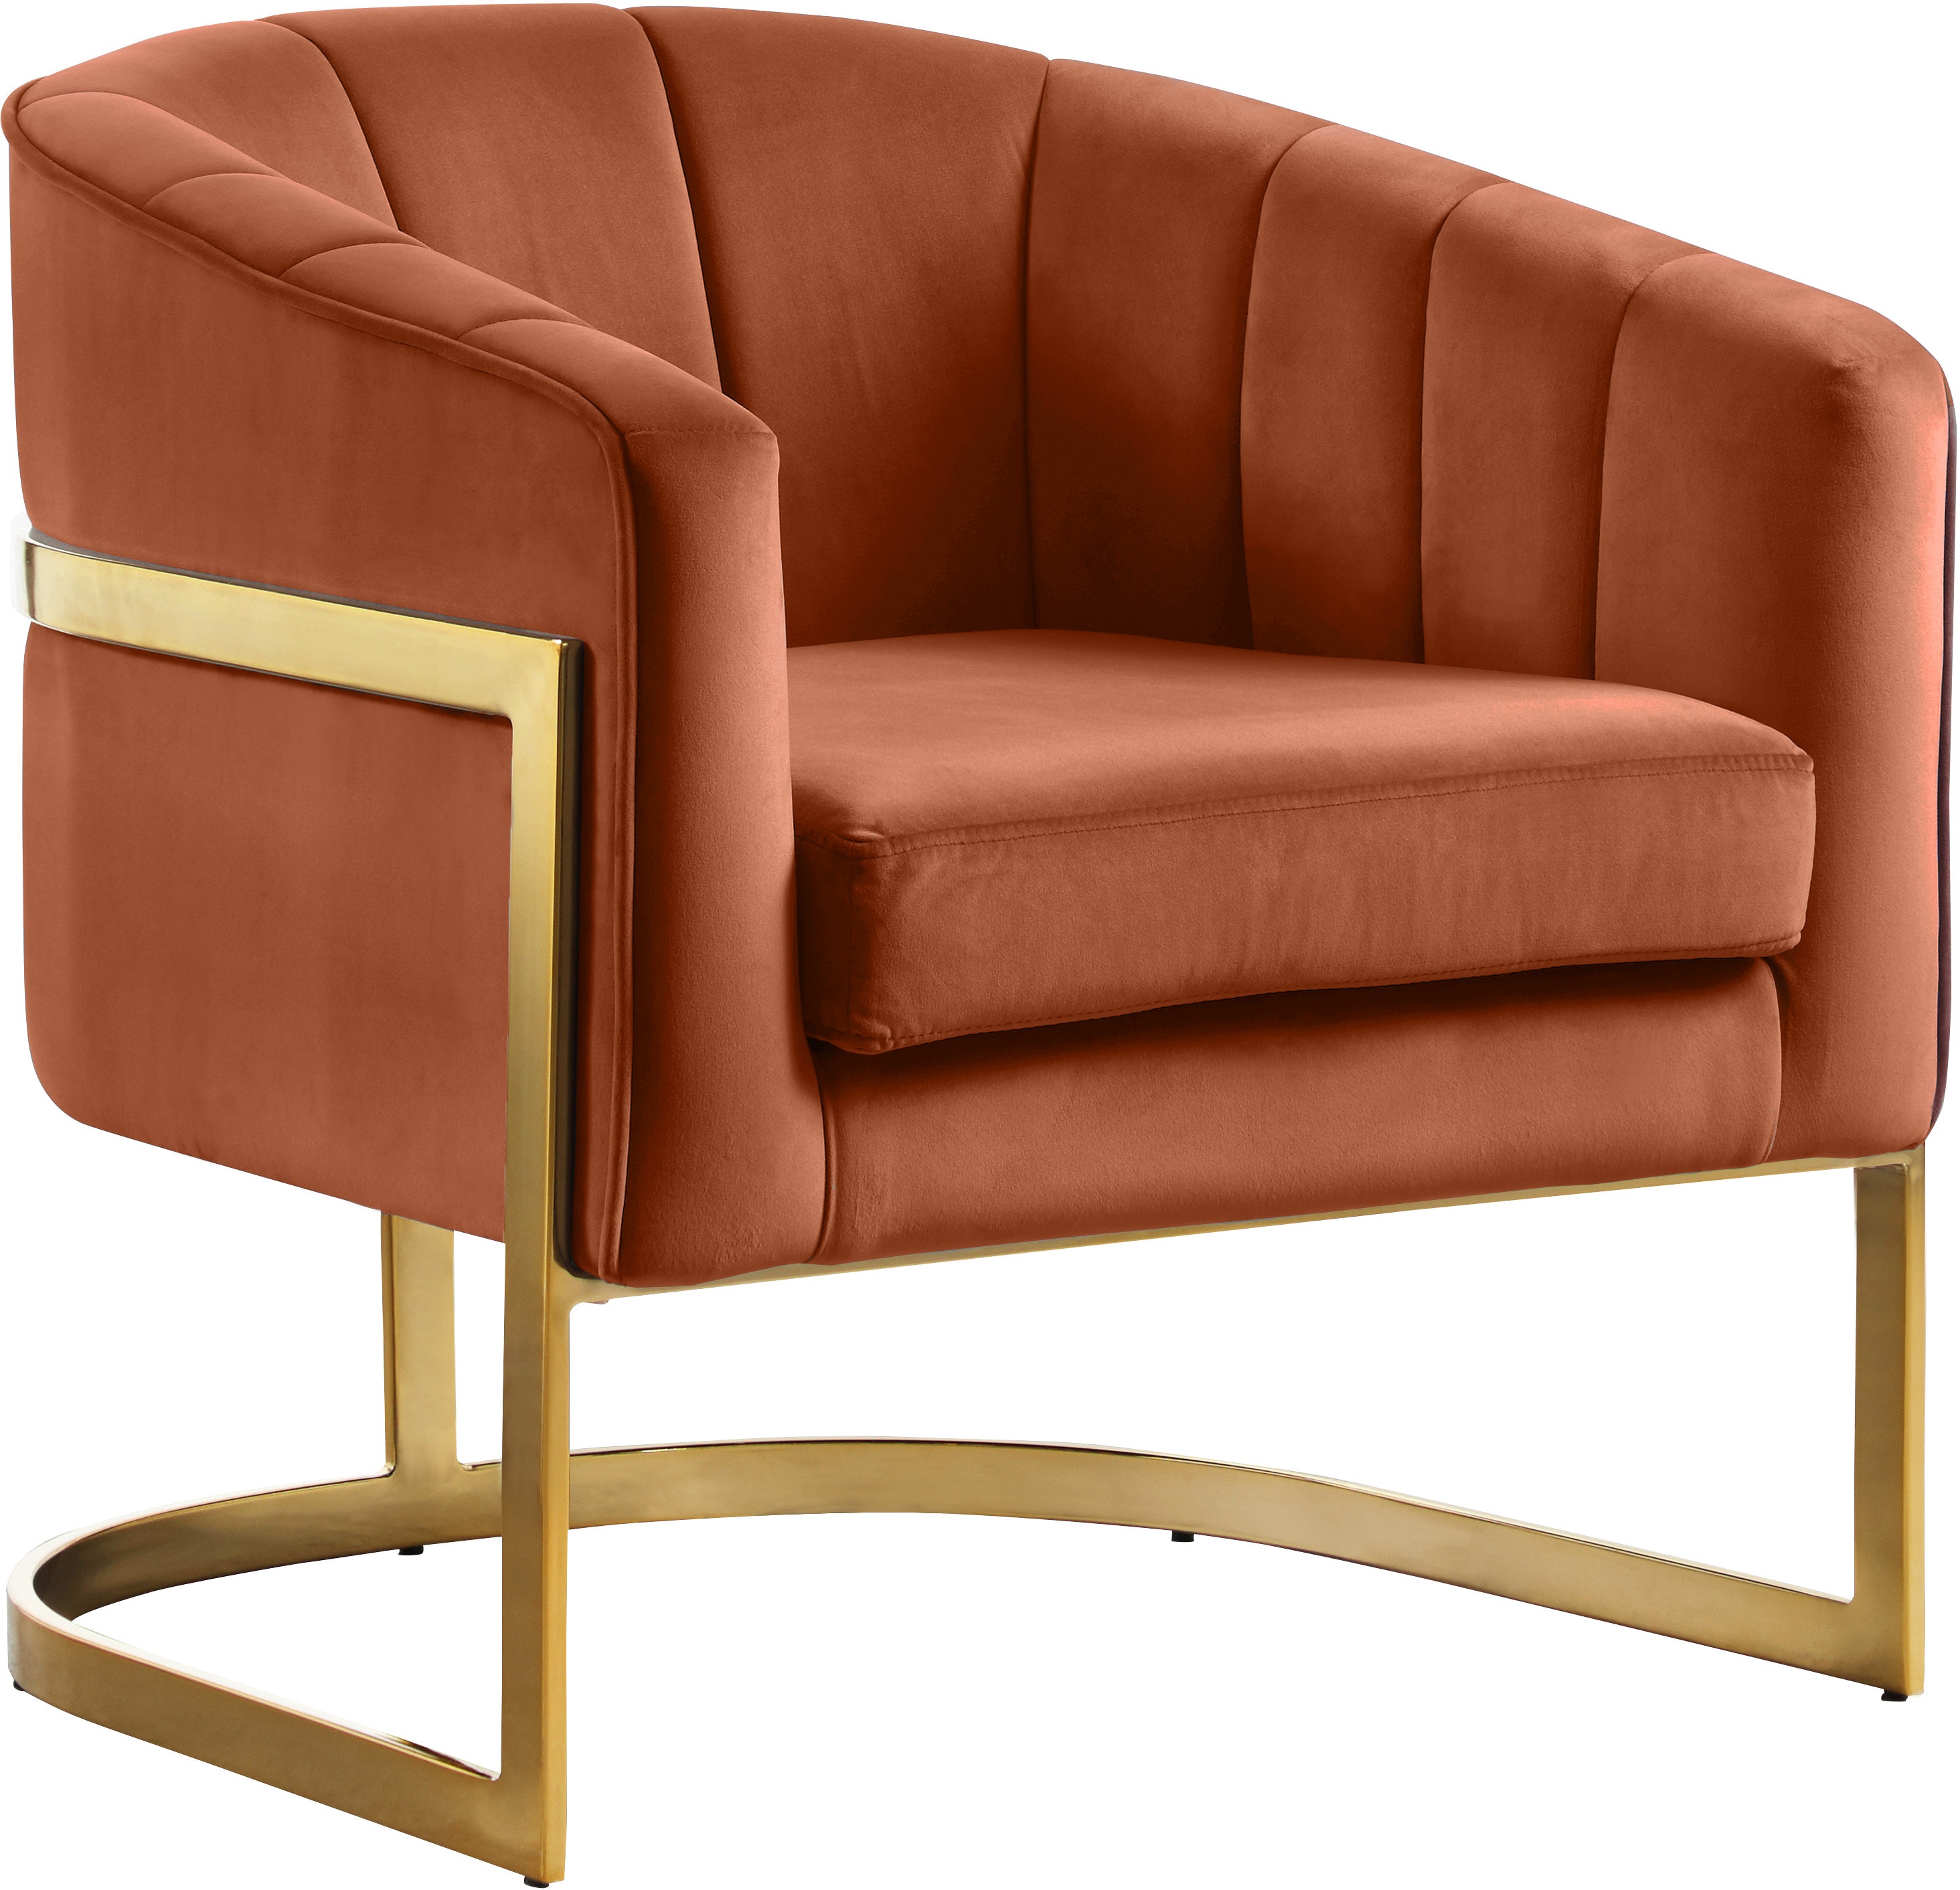 Meridian Furniture Carter Cognac Velvet Accent Chair 515Cognac Mattress Queen Philadelphia, PA